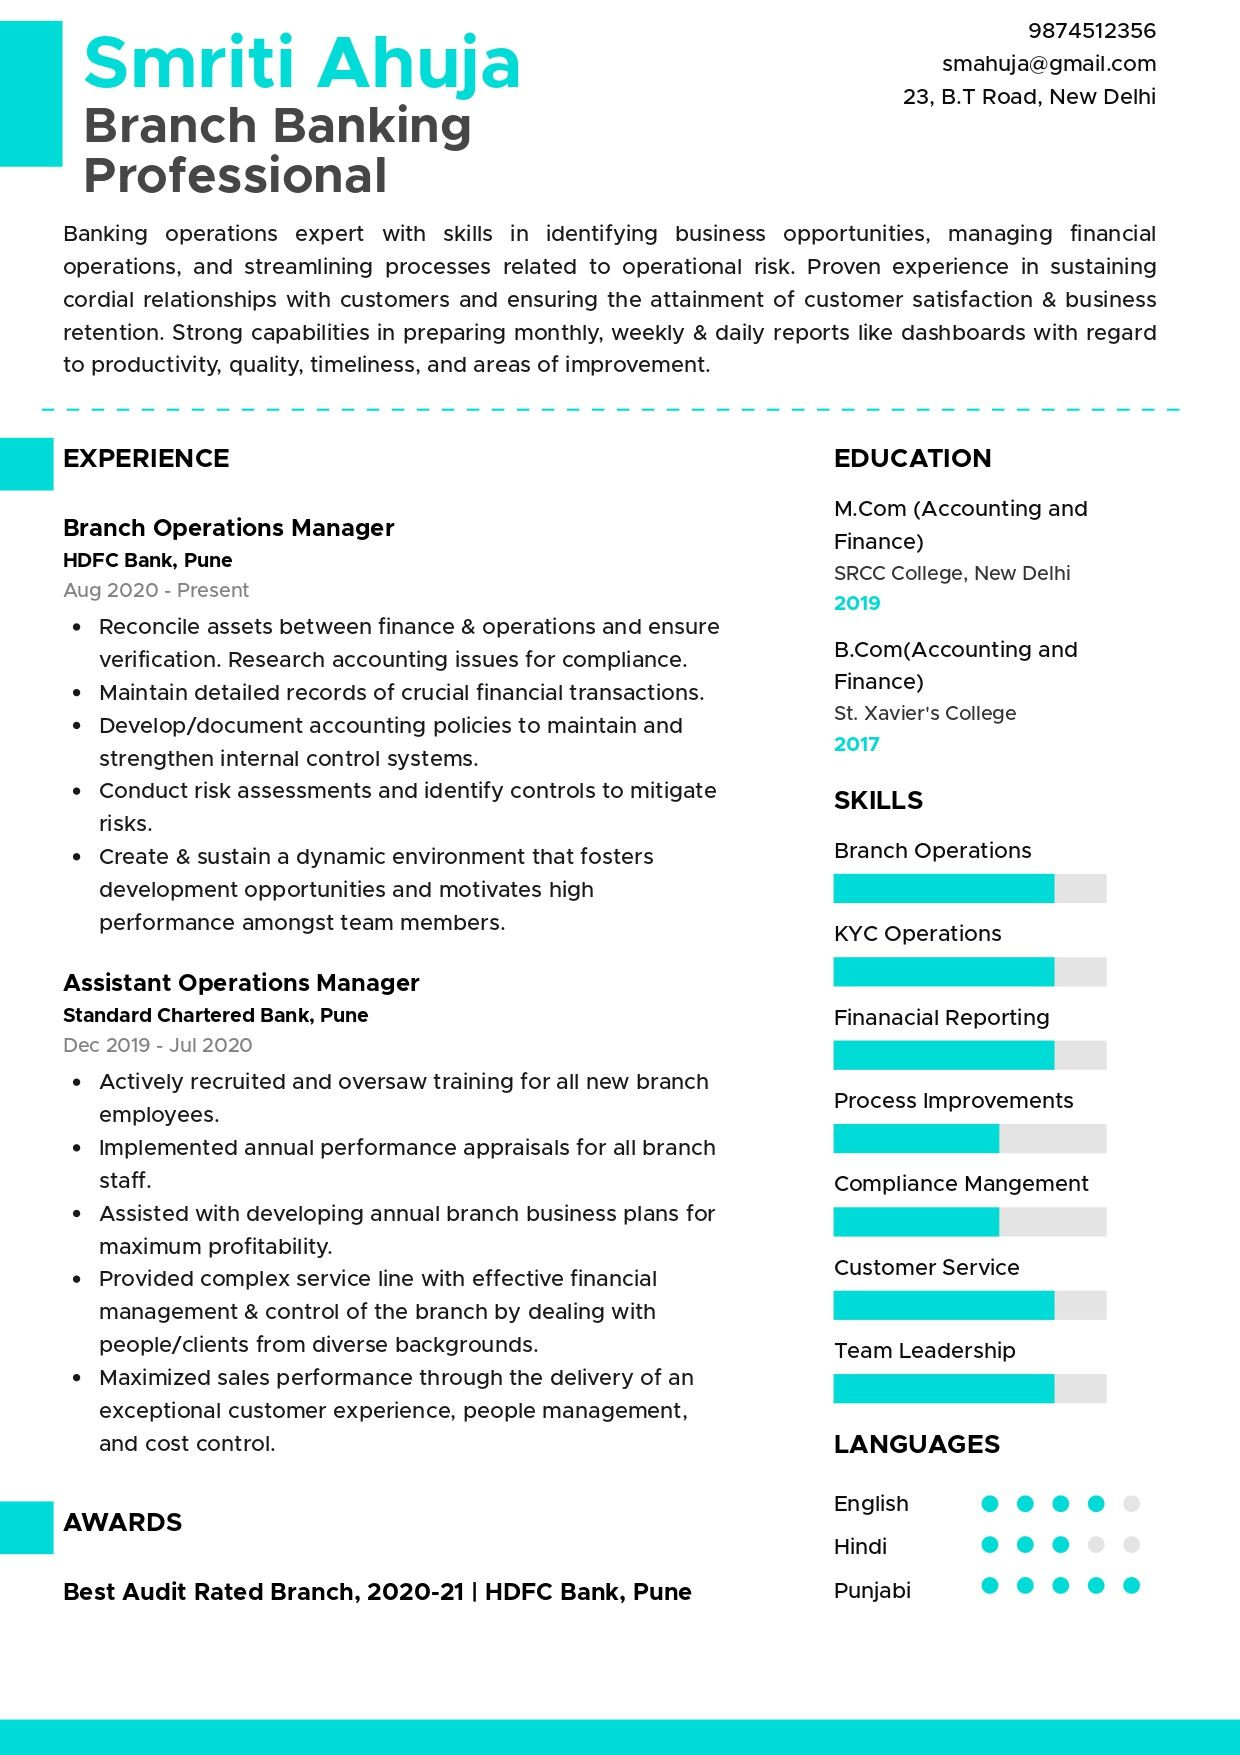 Sample Resume for Bank Jobs Freshe Writing A Resume for Banking and Finance Jobs [5 Examples]